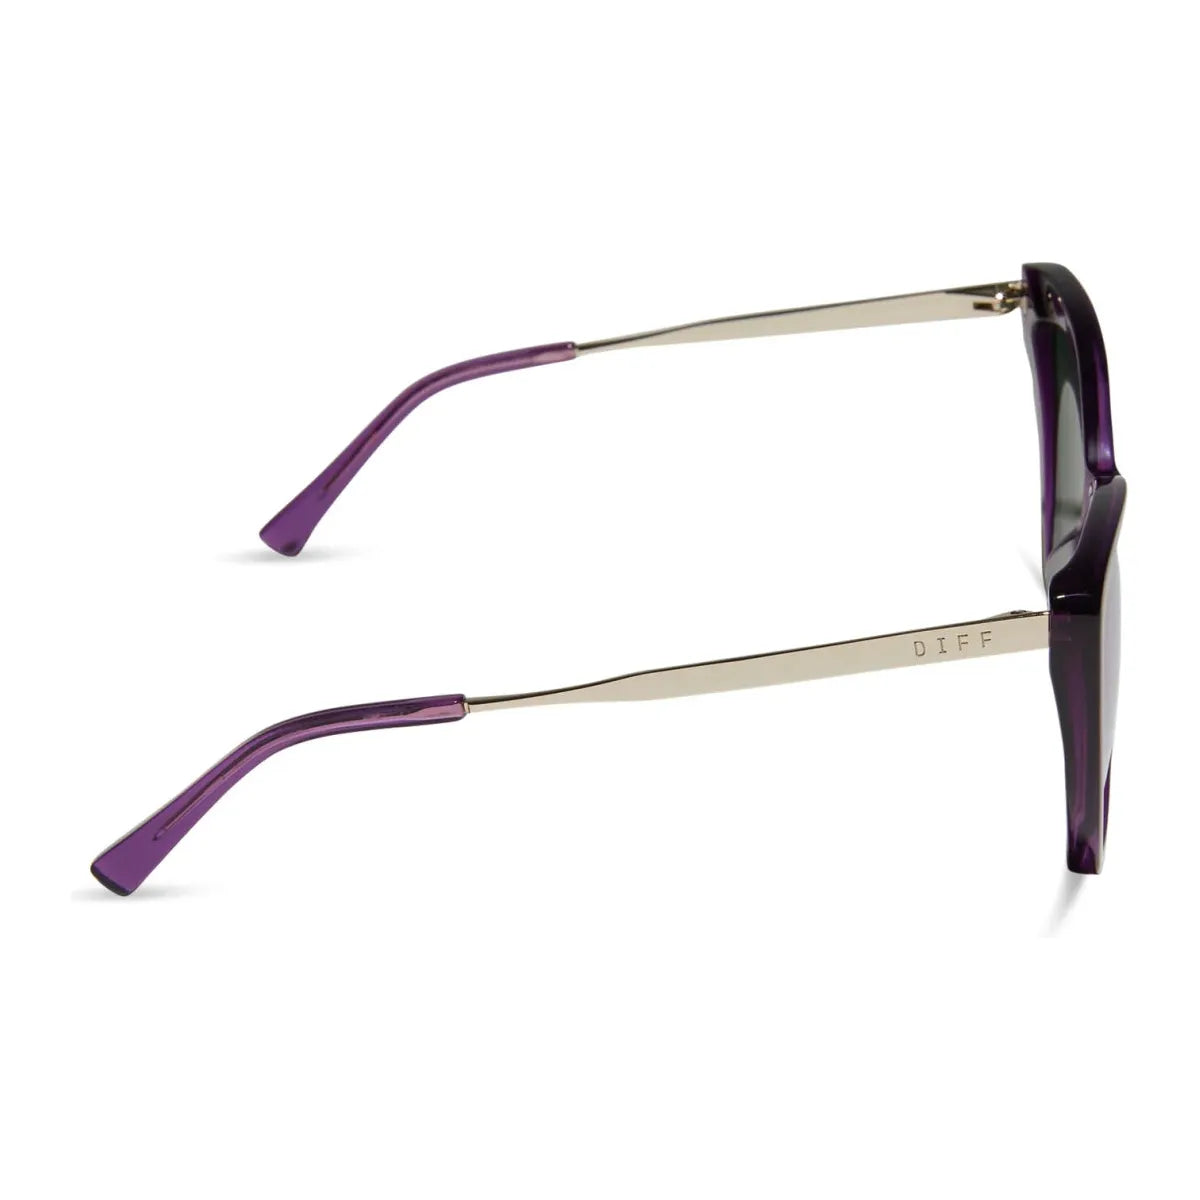 Diff Becky II Posh Purple Crystal Purple Mirror Polarized Sunglasses - Miles and Bishop